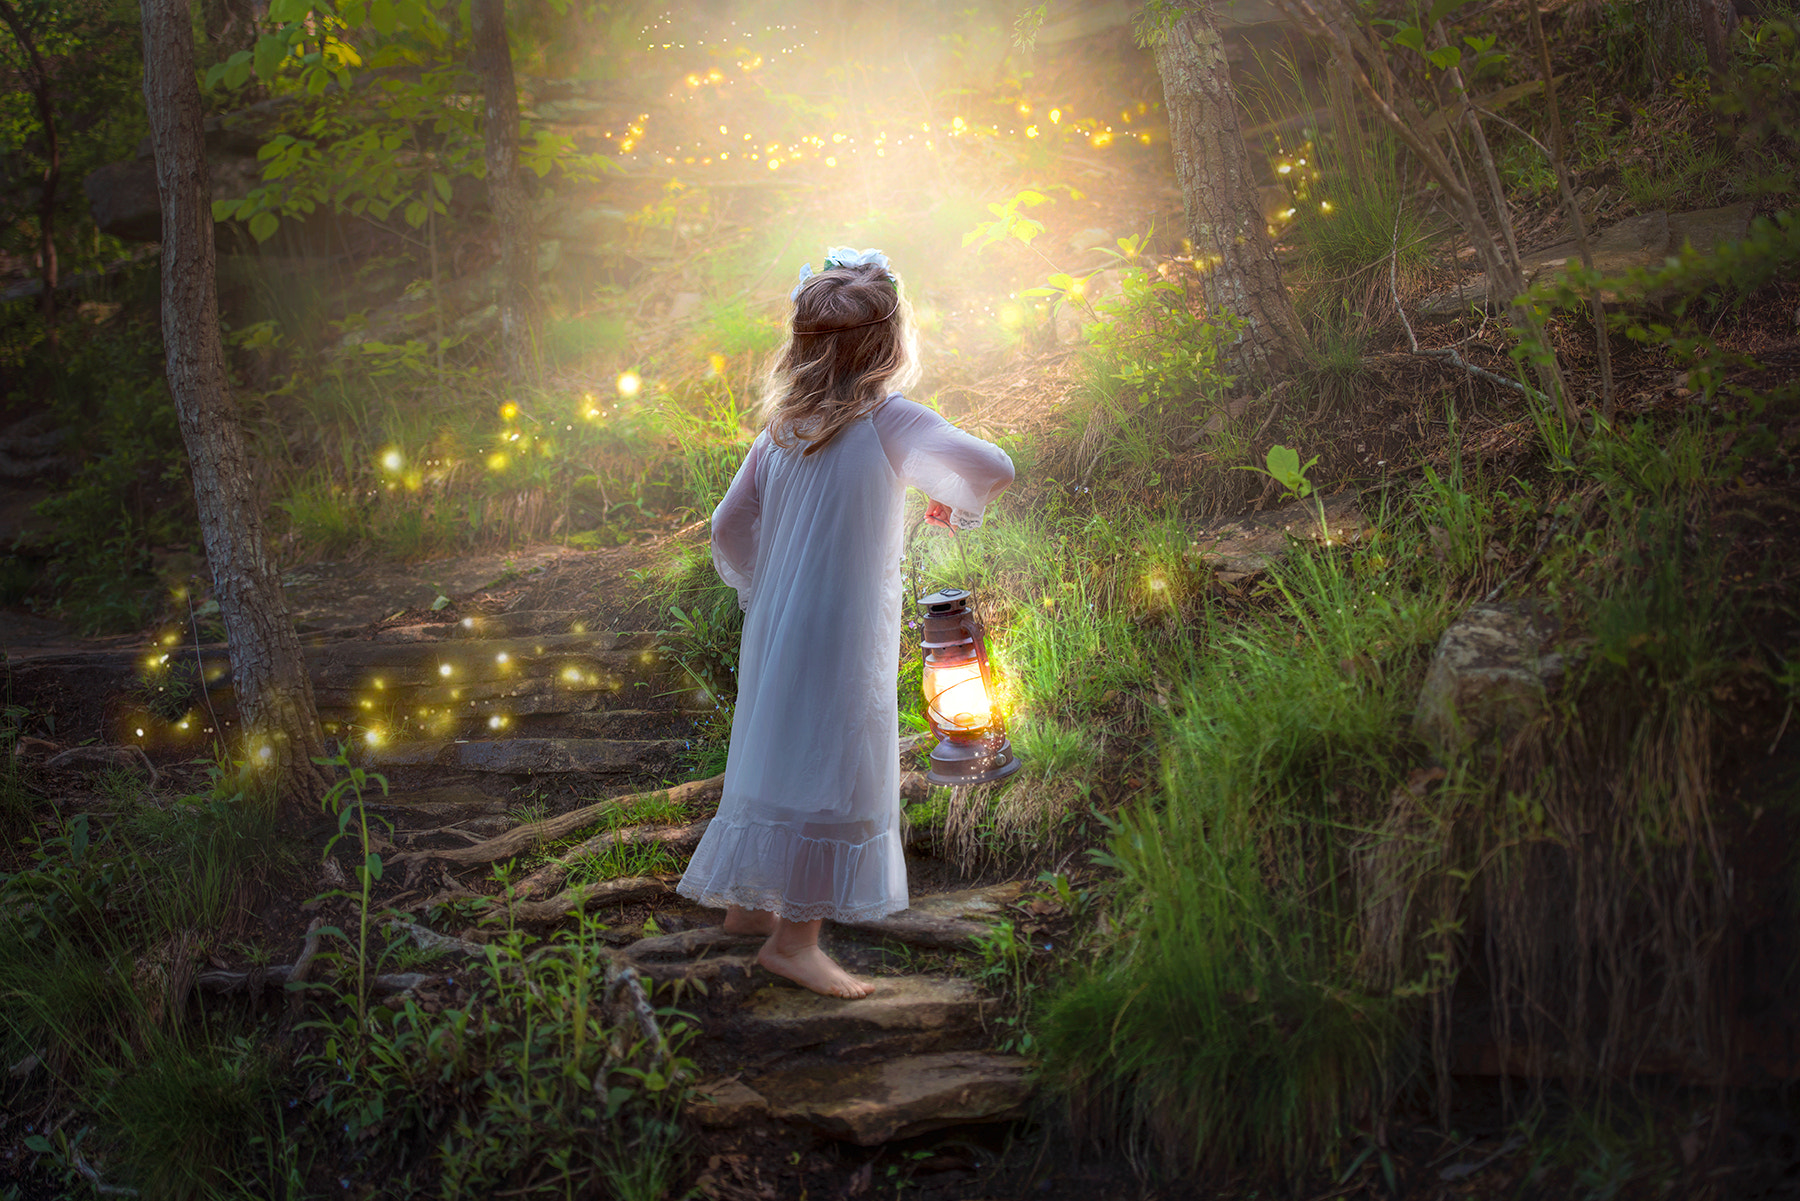 Jessica Drossin Children Blonde Wind Dress White Clothing Barefoot Magic Lantern Forest Bright 1800x1201